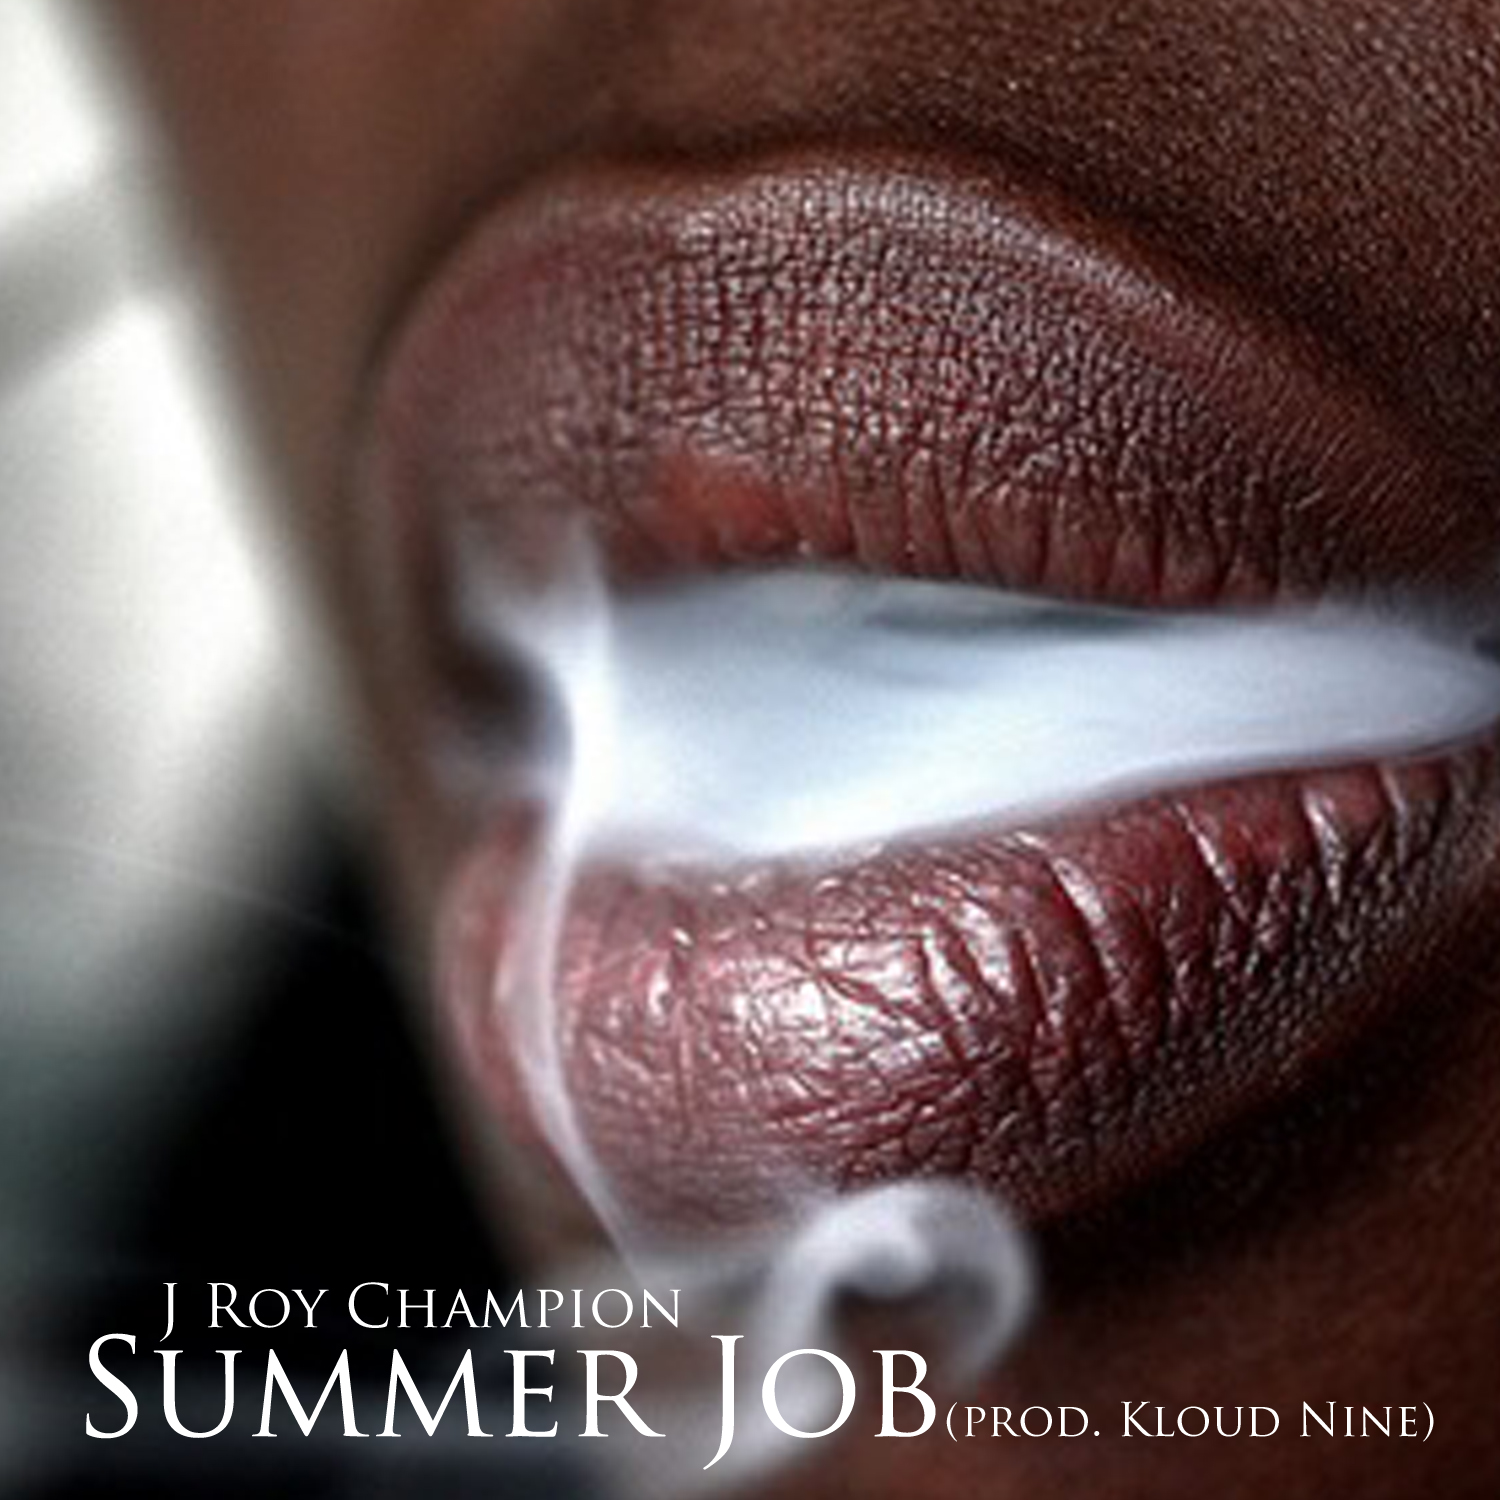 J Roy Champion "Summer Job" prod. Kloud Nine